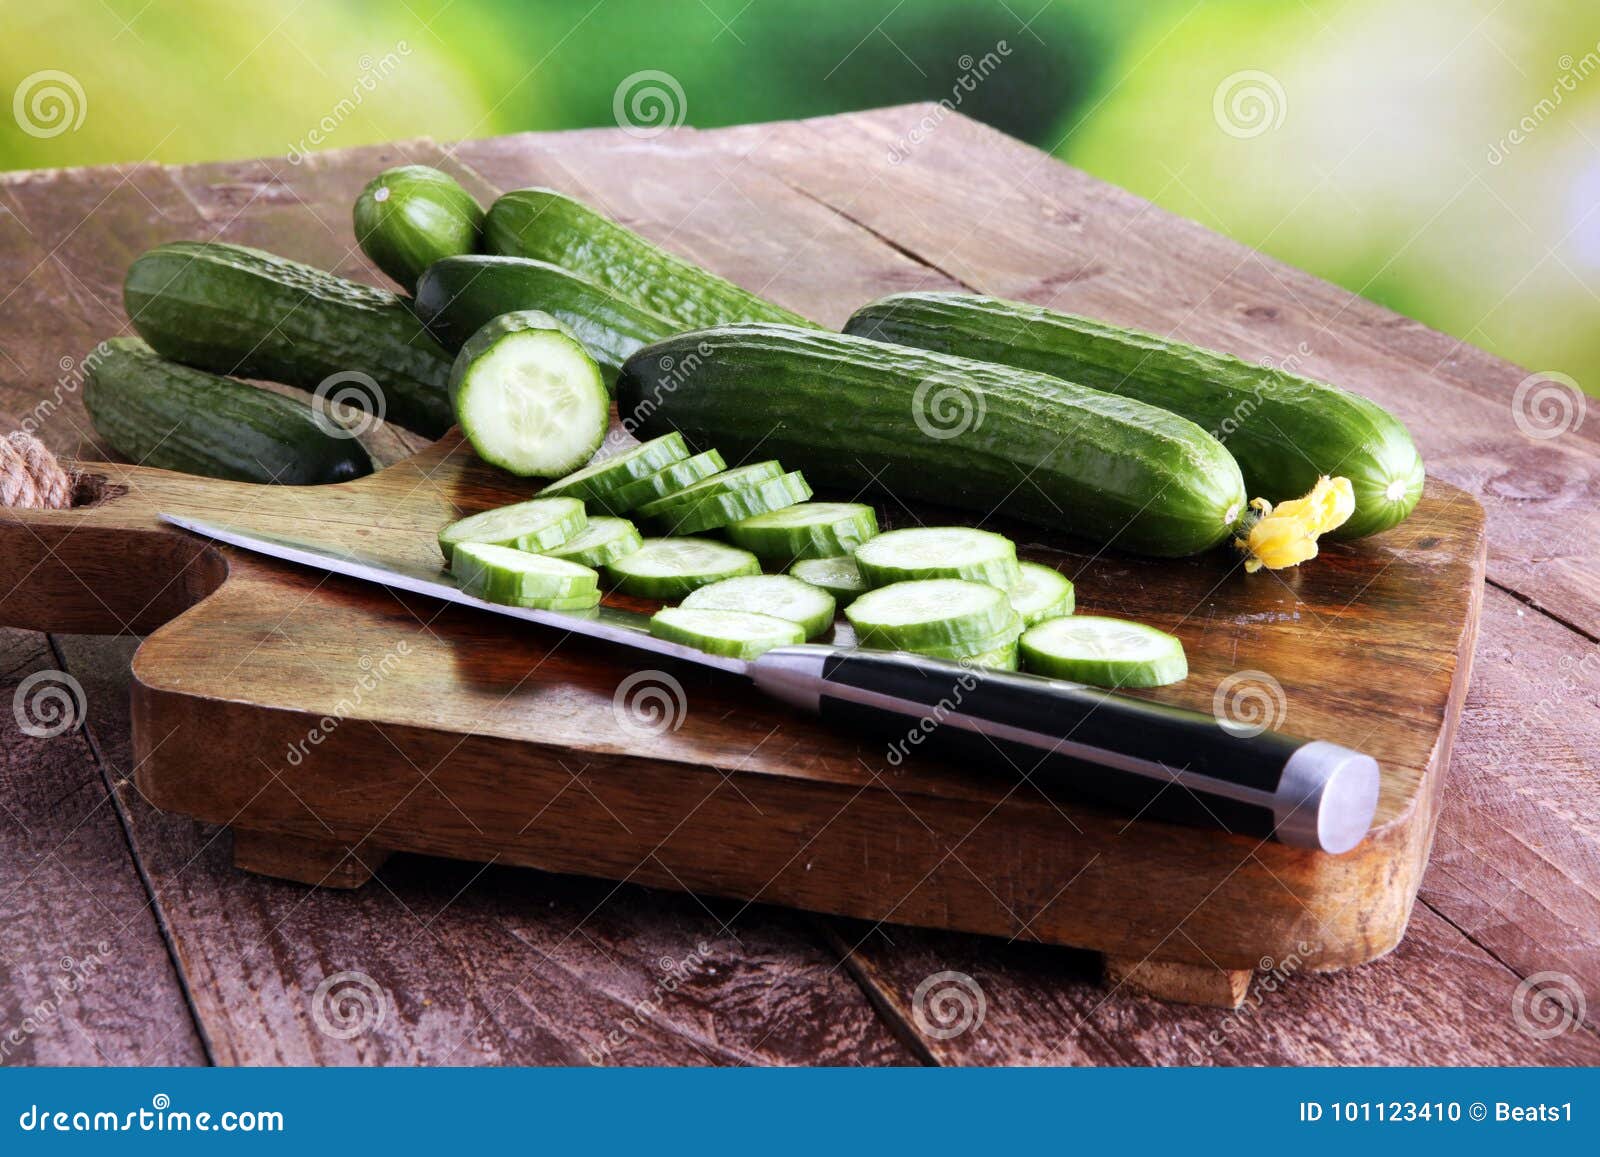 fresh and sliced cucumbers. sliced cucumbers on a cutting board.